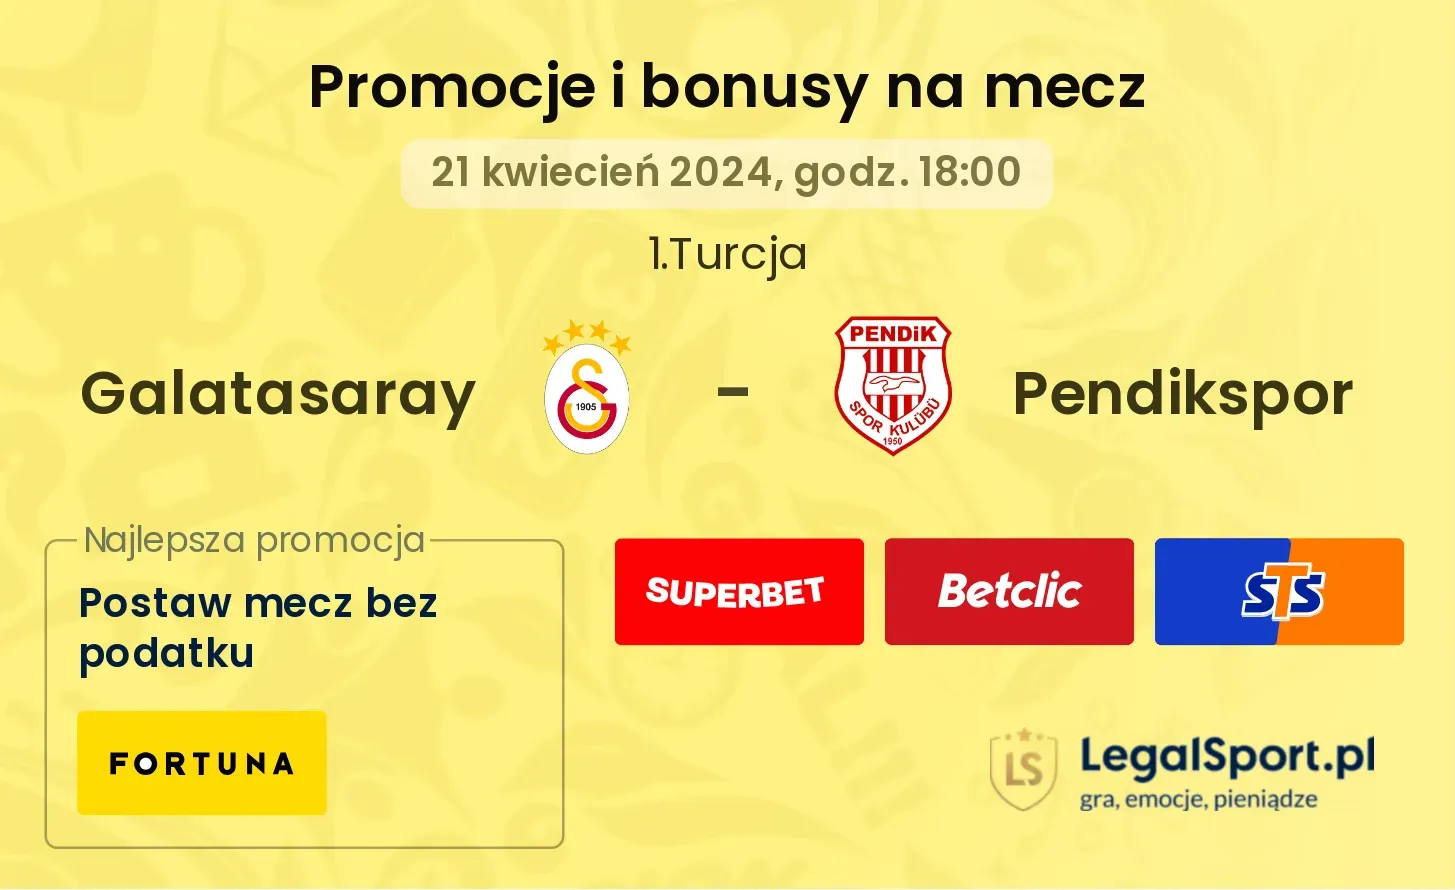 Galatasaray - Pendikspor promocje bonusy na mecz